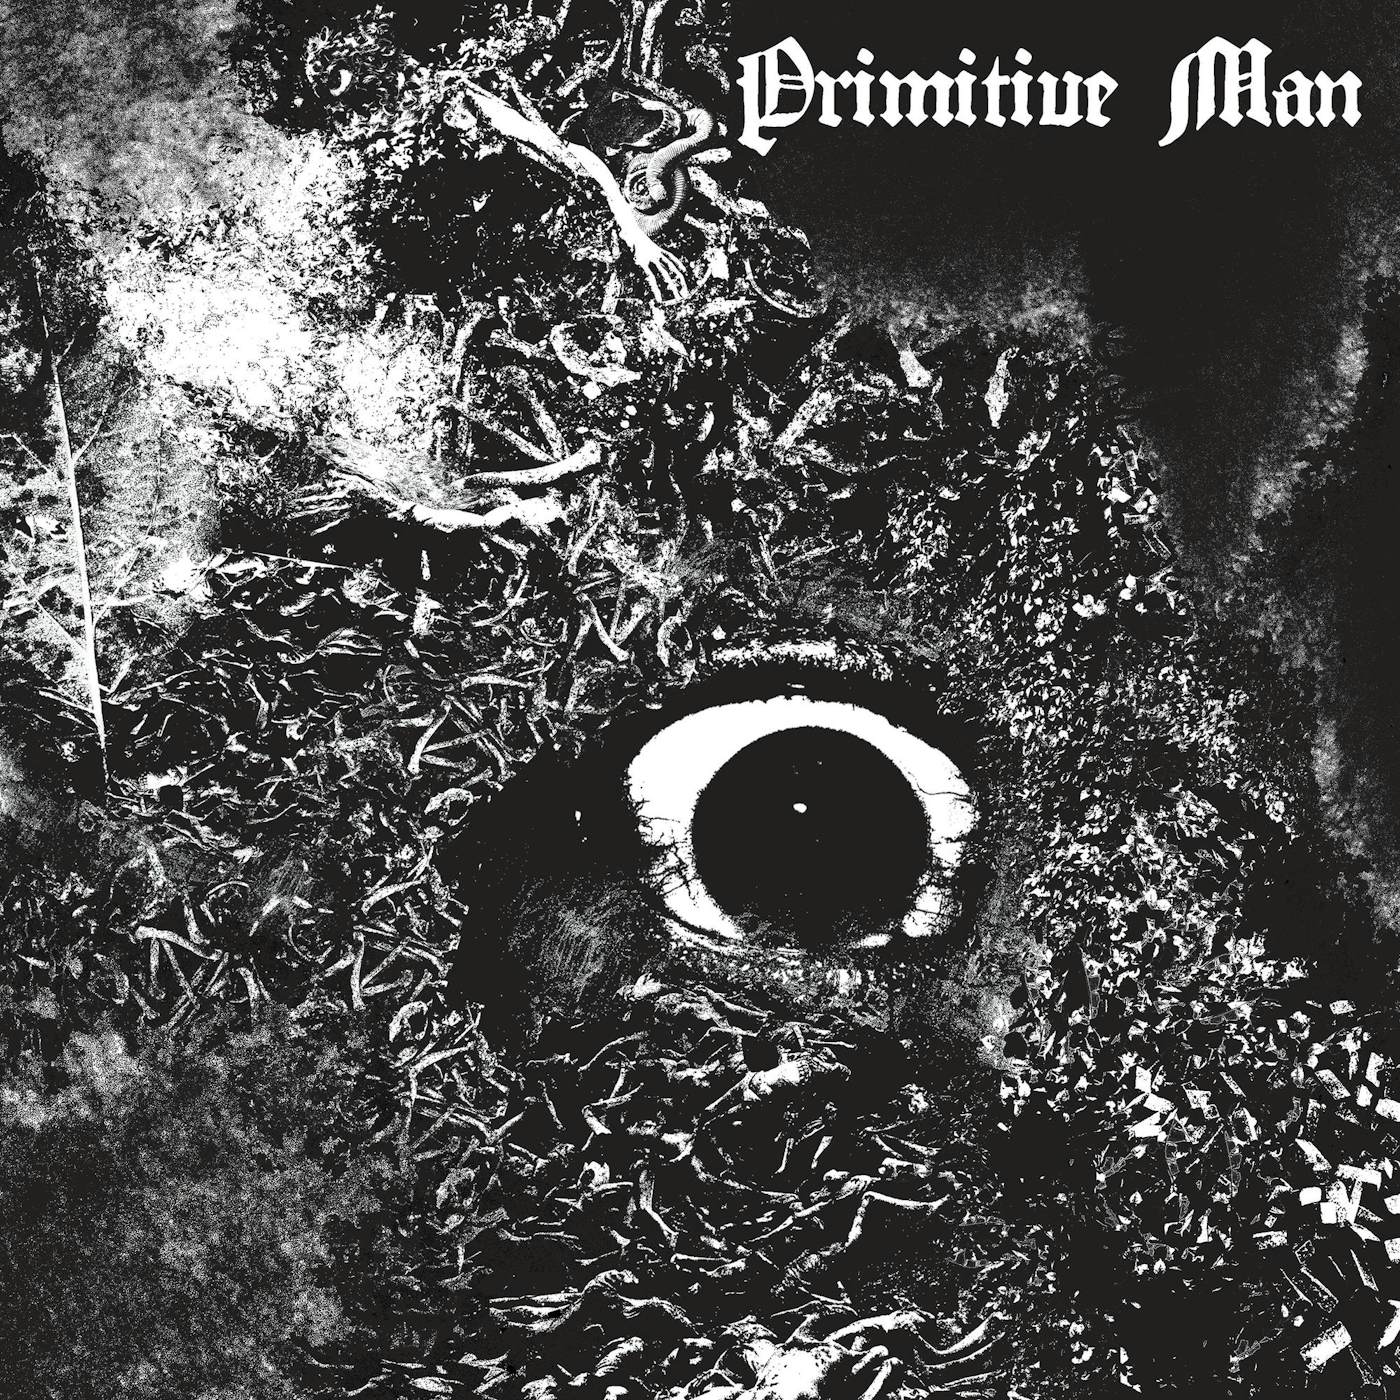 Primitive Man IMMERSION CD